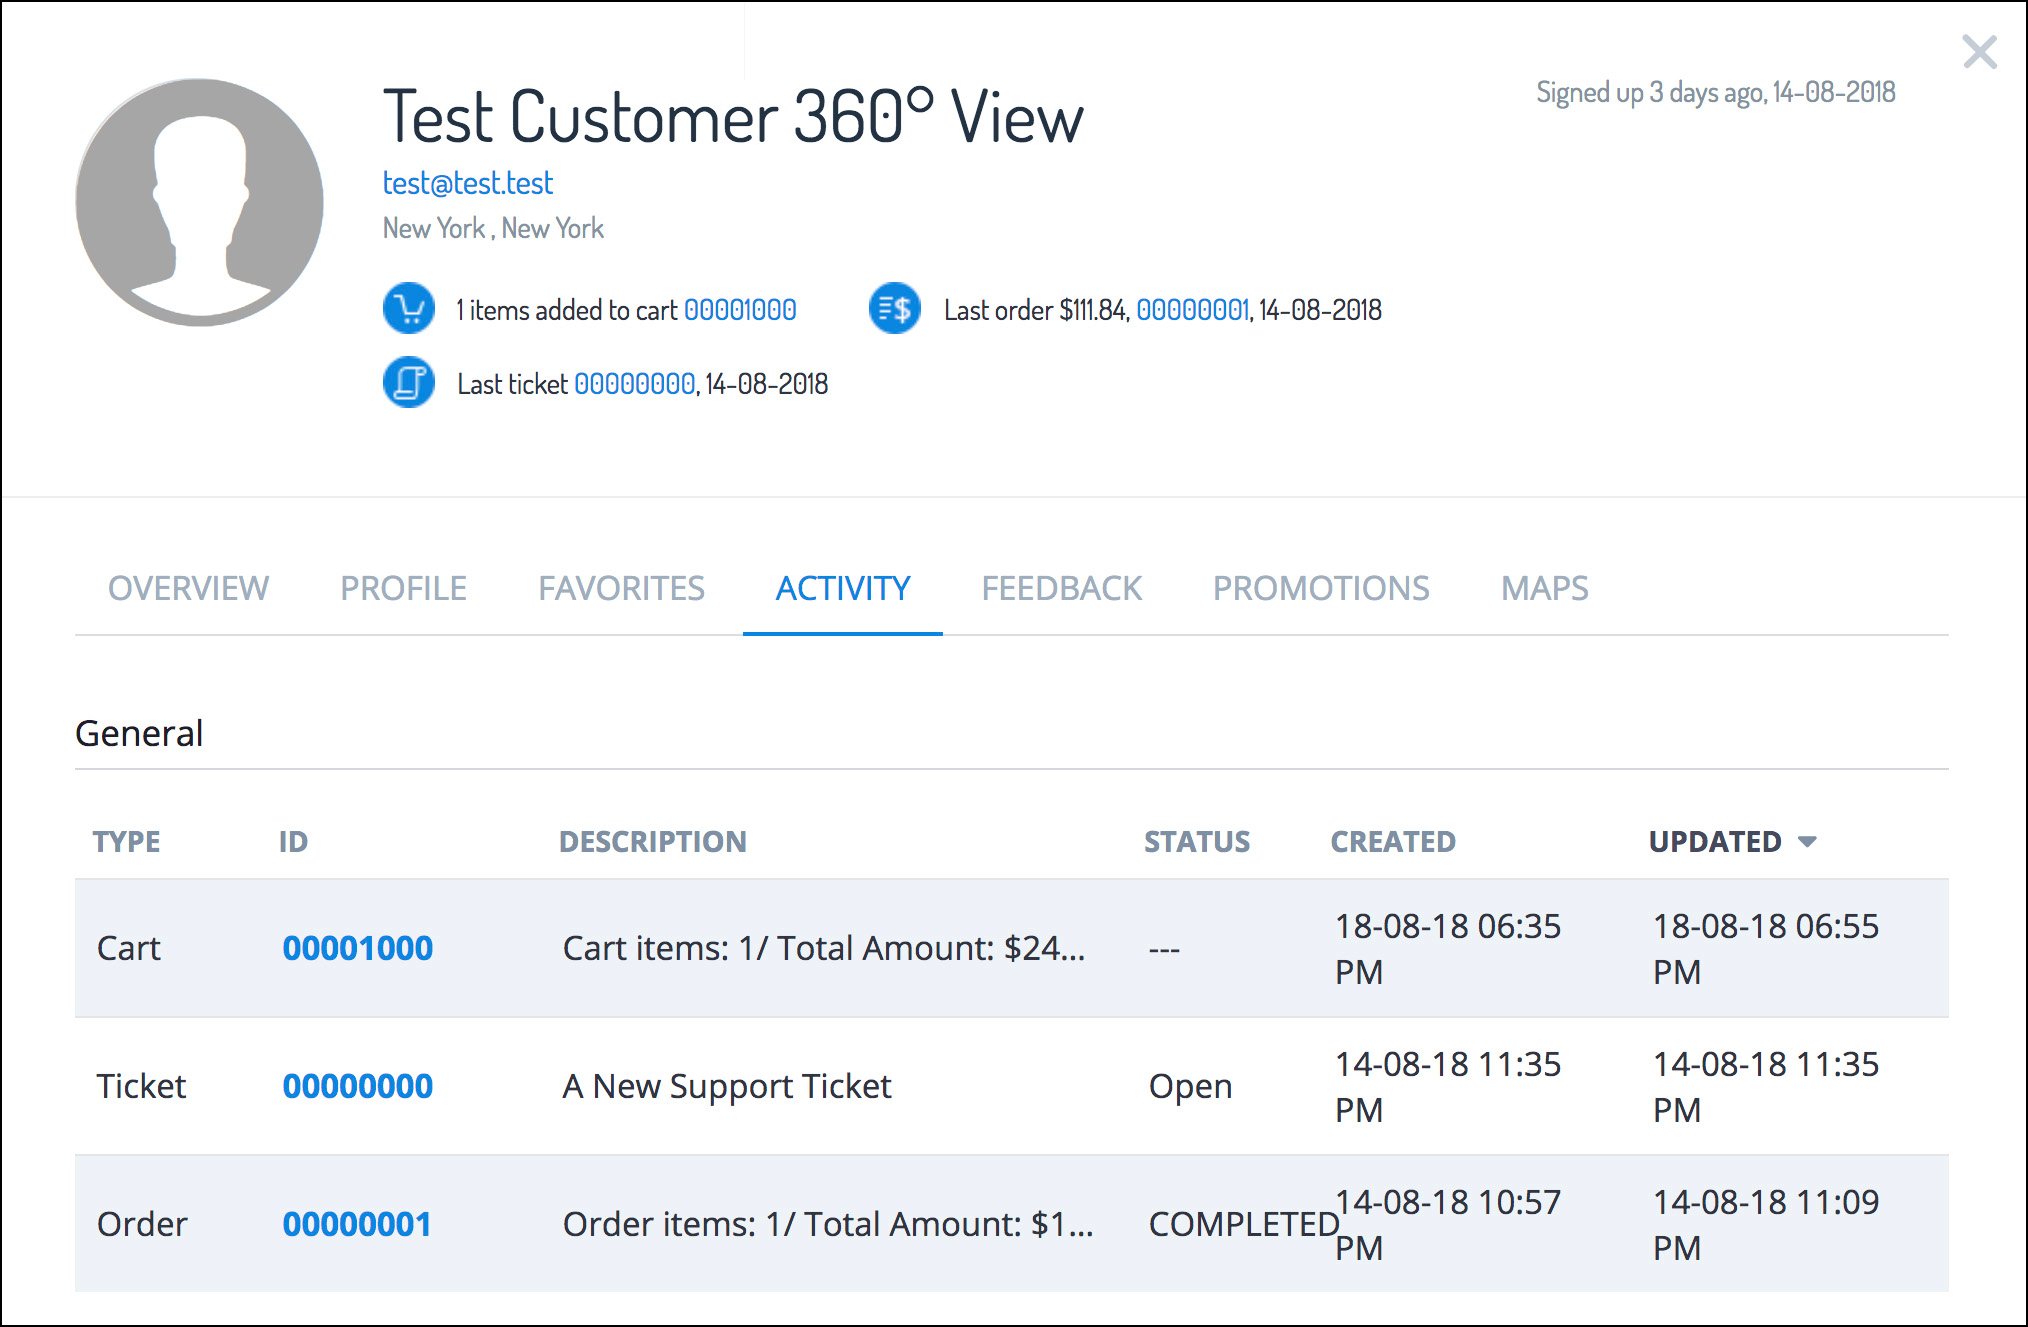 Test Customer 360 View